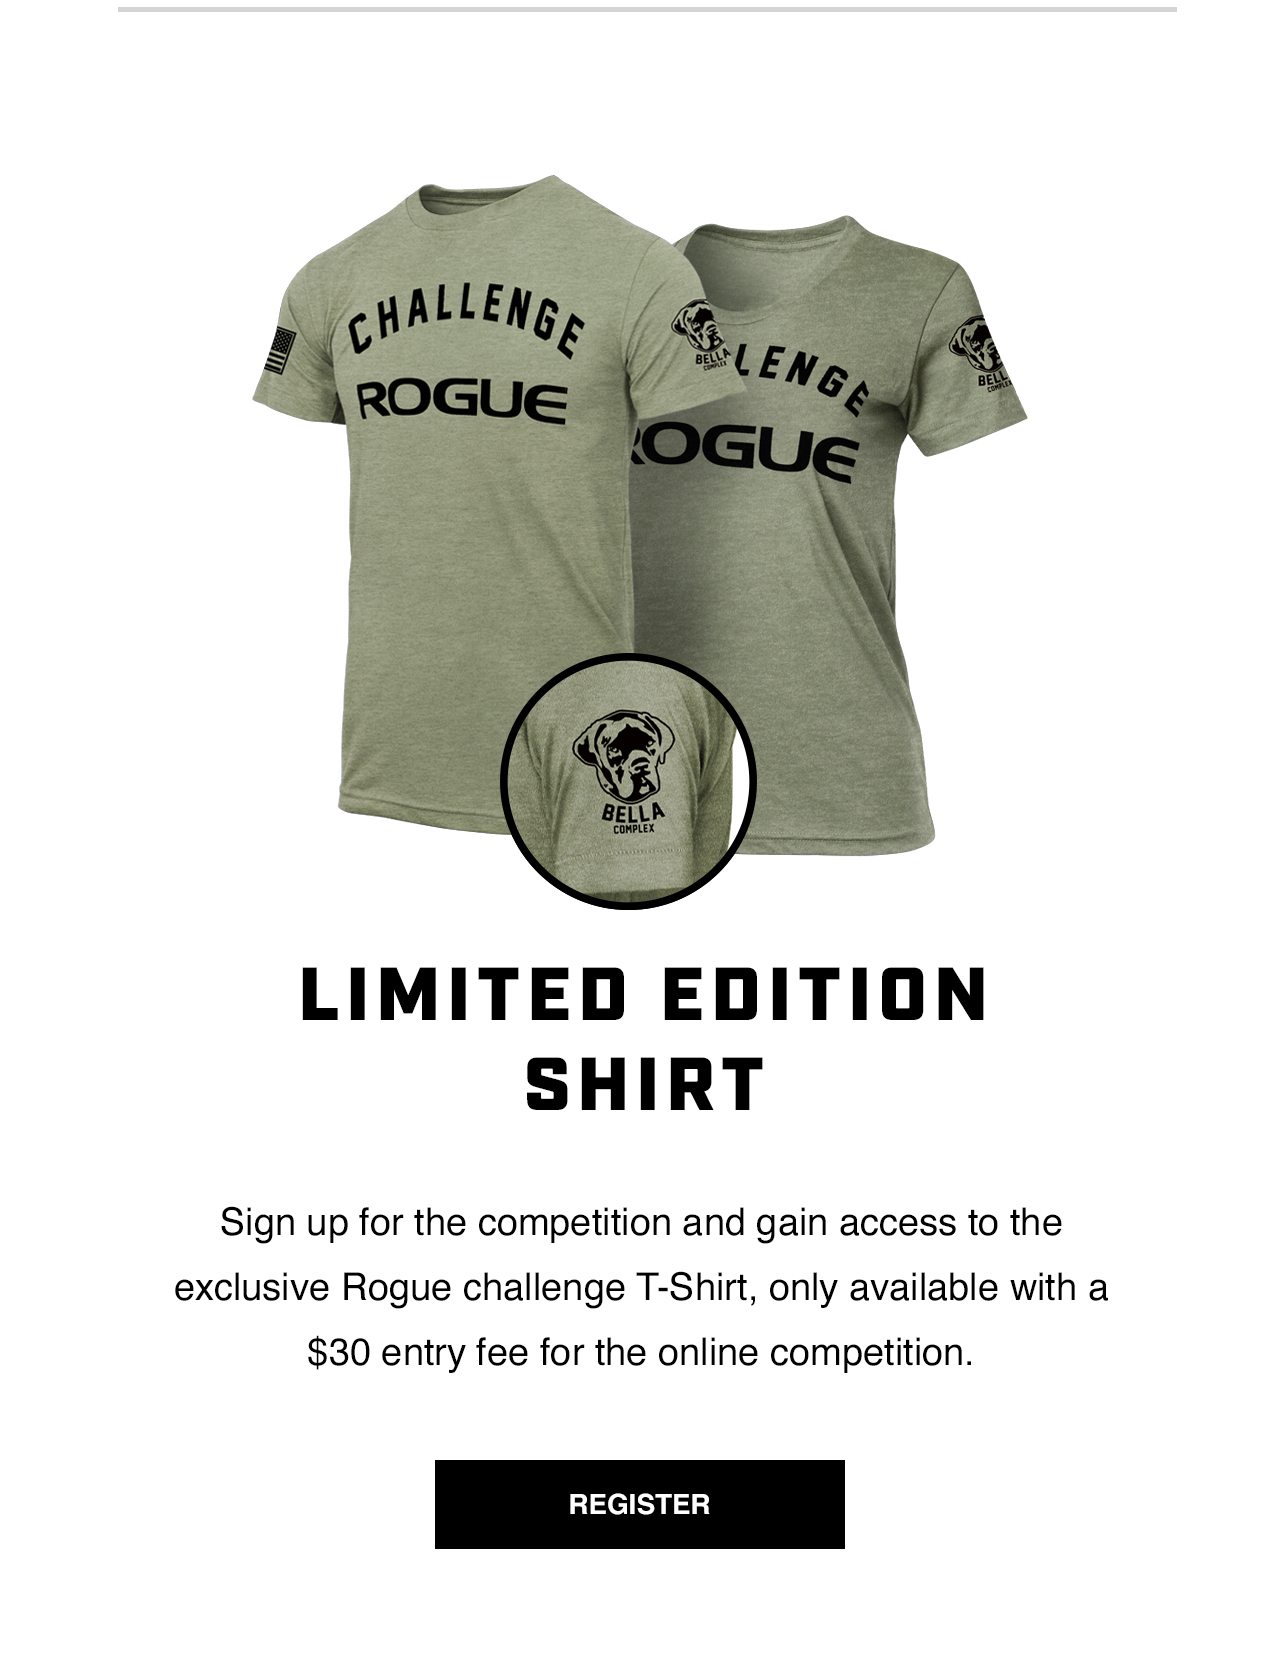 Limited Edition Shirt - Register